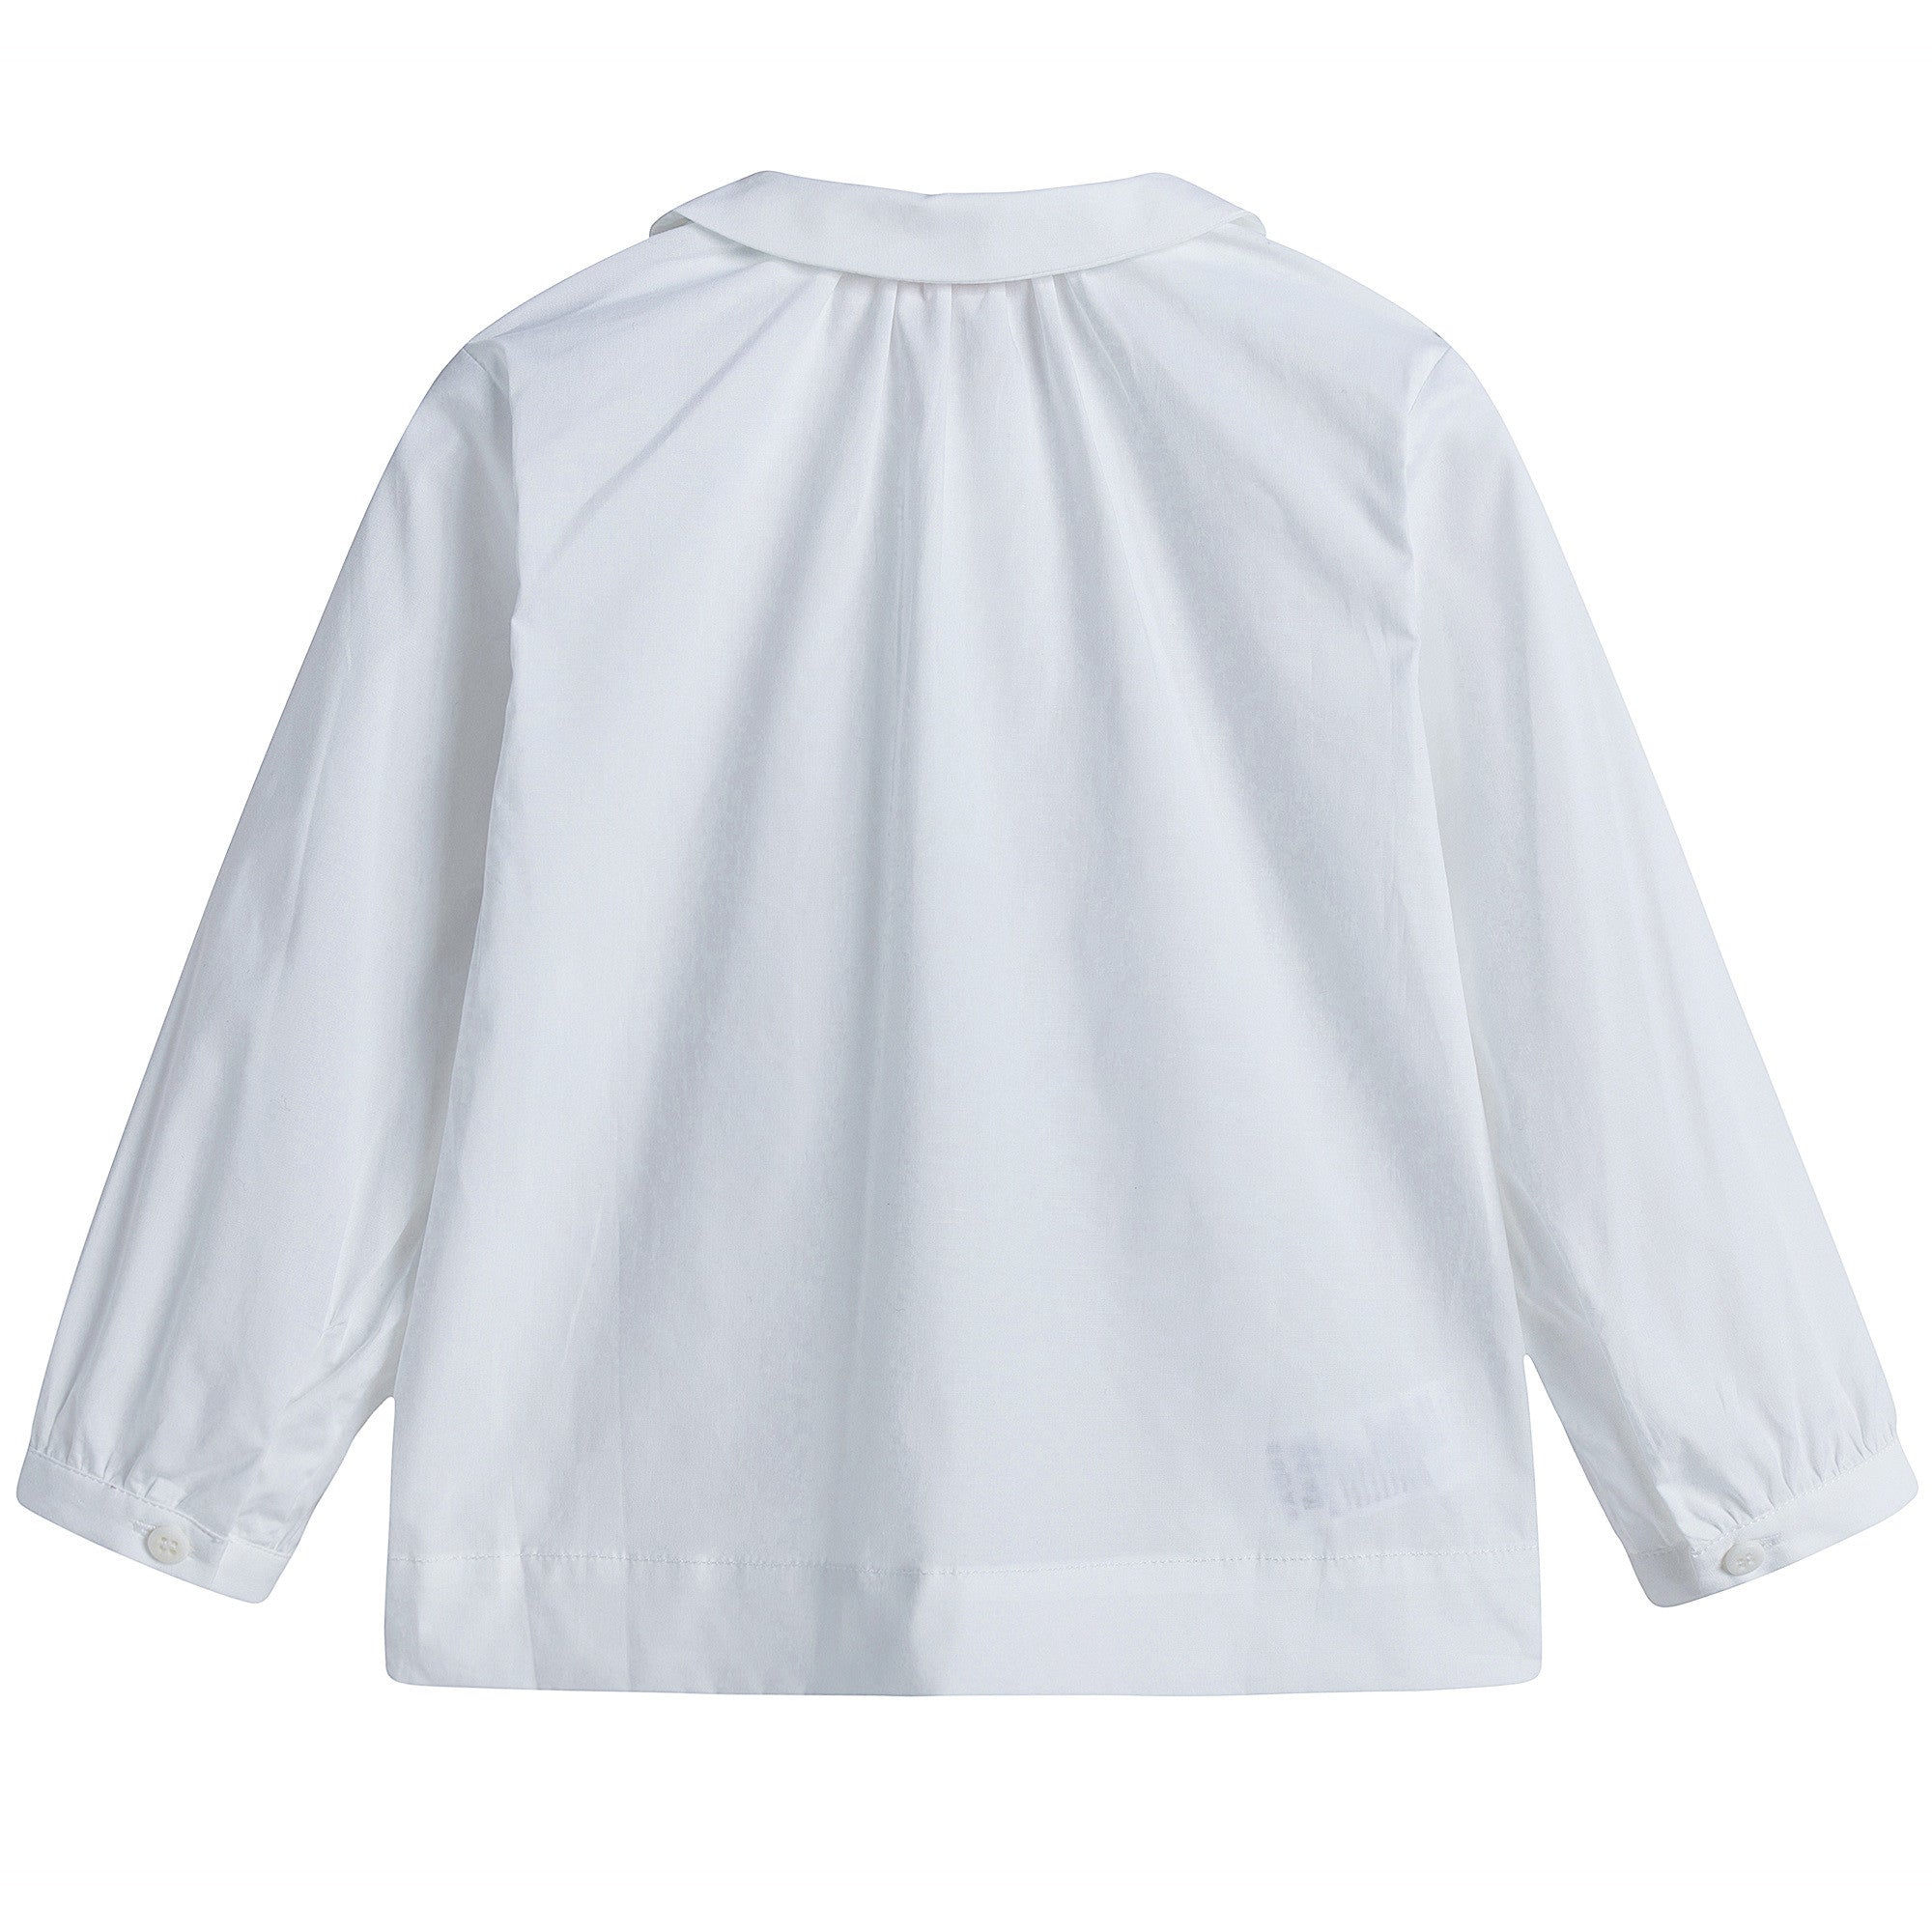 Girls White Cotton Blouse - CÉMAROSE | Children's Fashion Store - 2